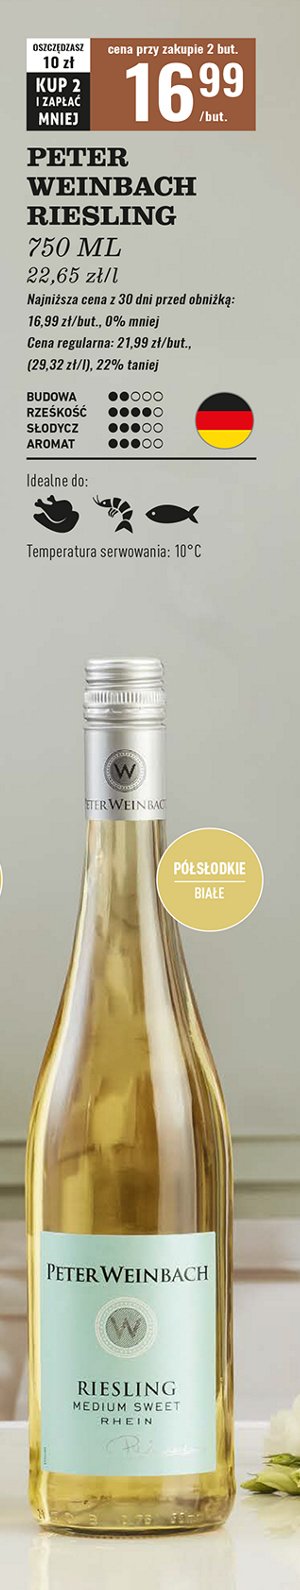 Wino PETER WEINBACH RIESLING promocja